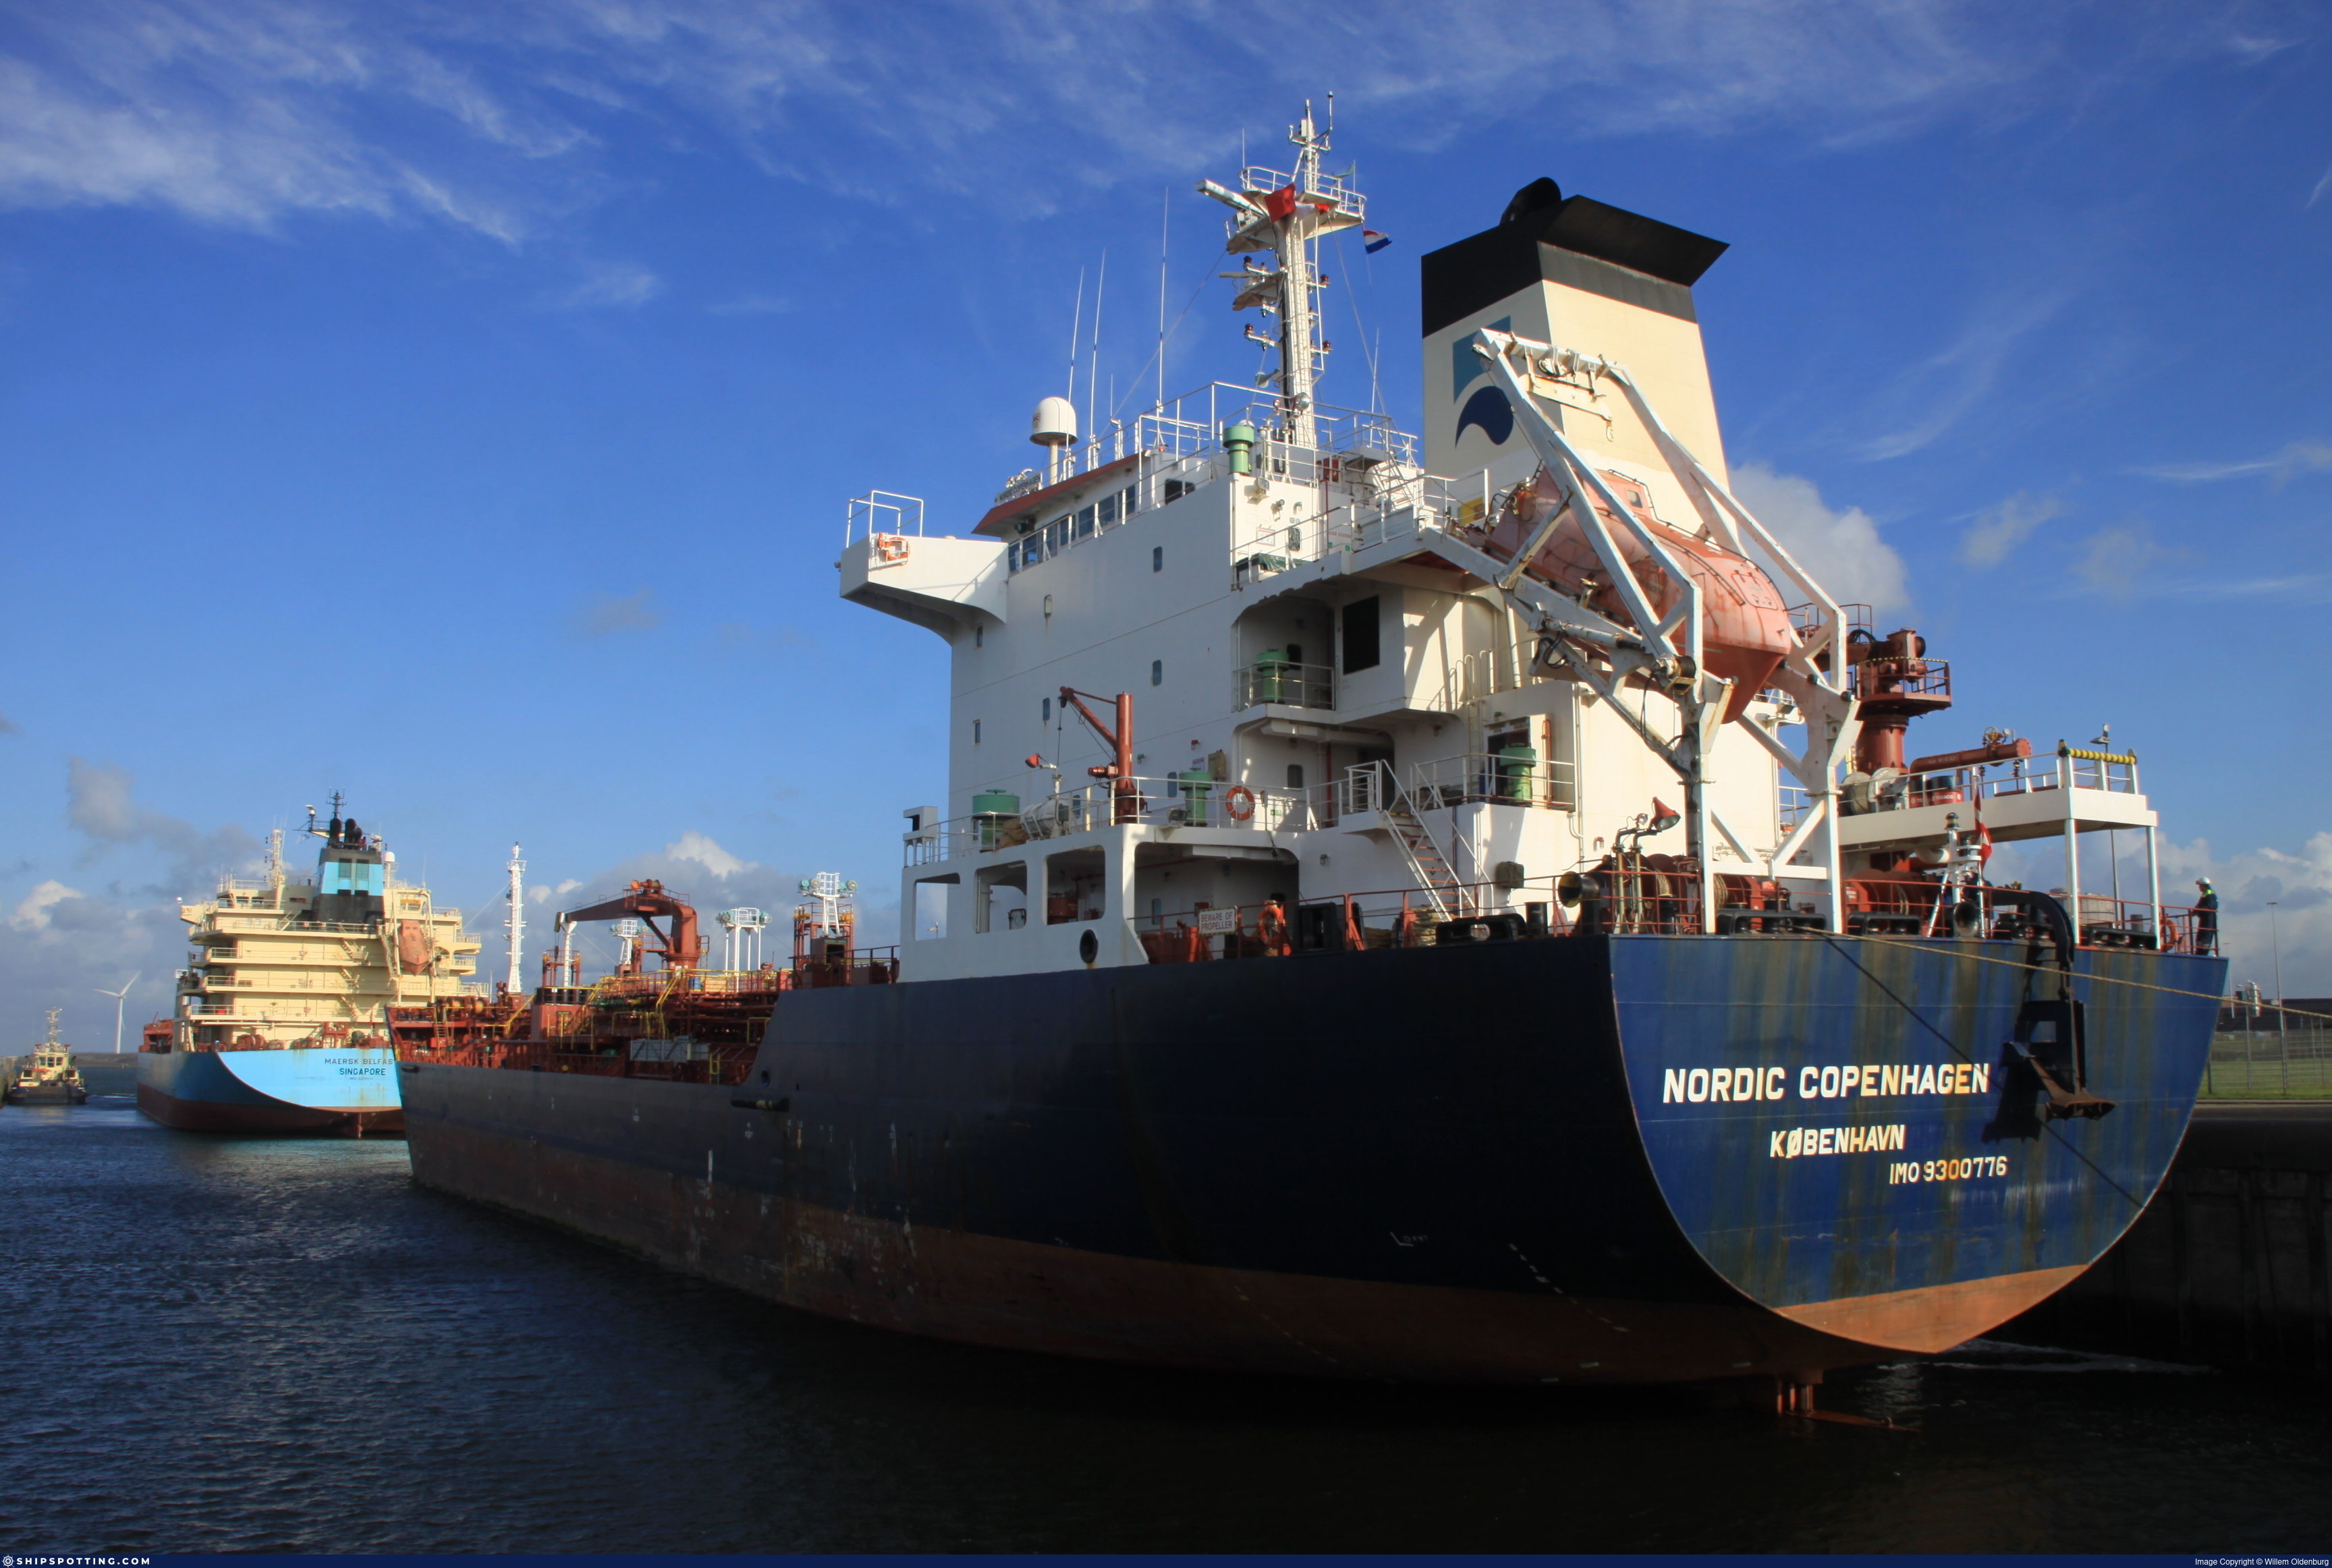 Nordic Copenhagen & MAERSK BELFAST - IMO 9300776 - ShipSpotting.com - Ship  Photos, Information, Videos and Ship Tracker